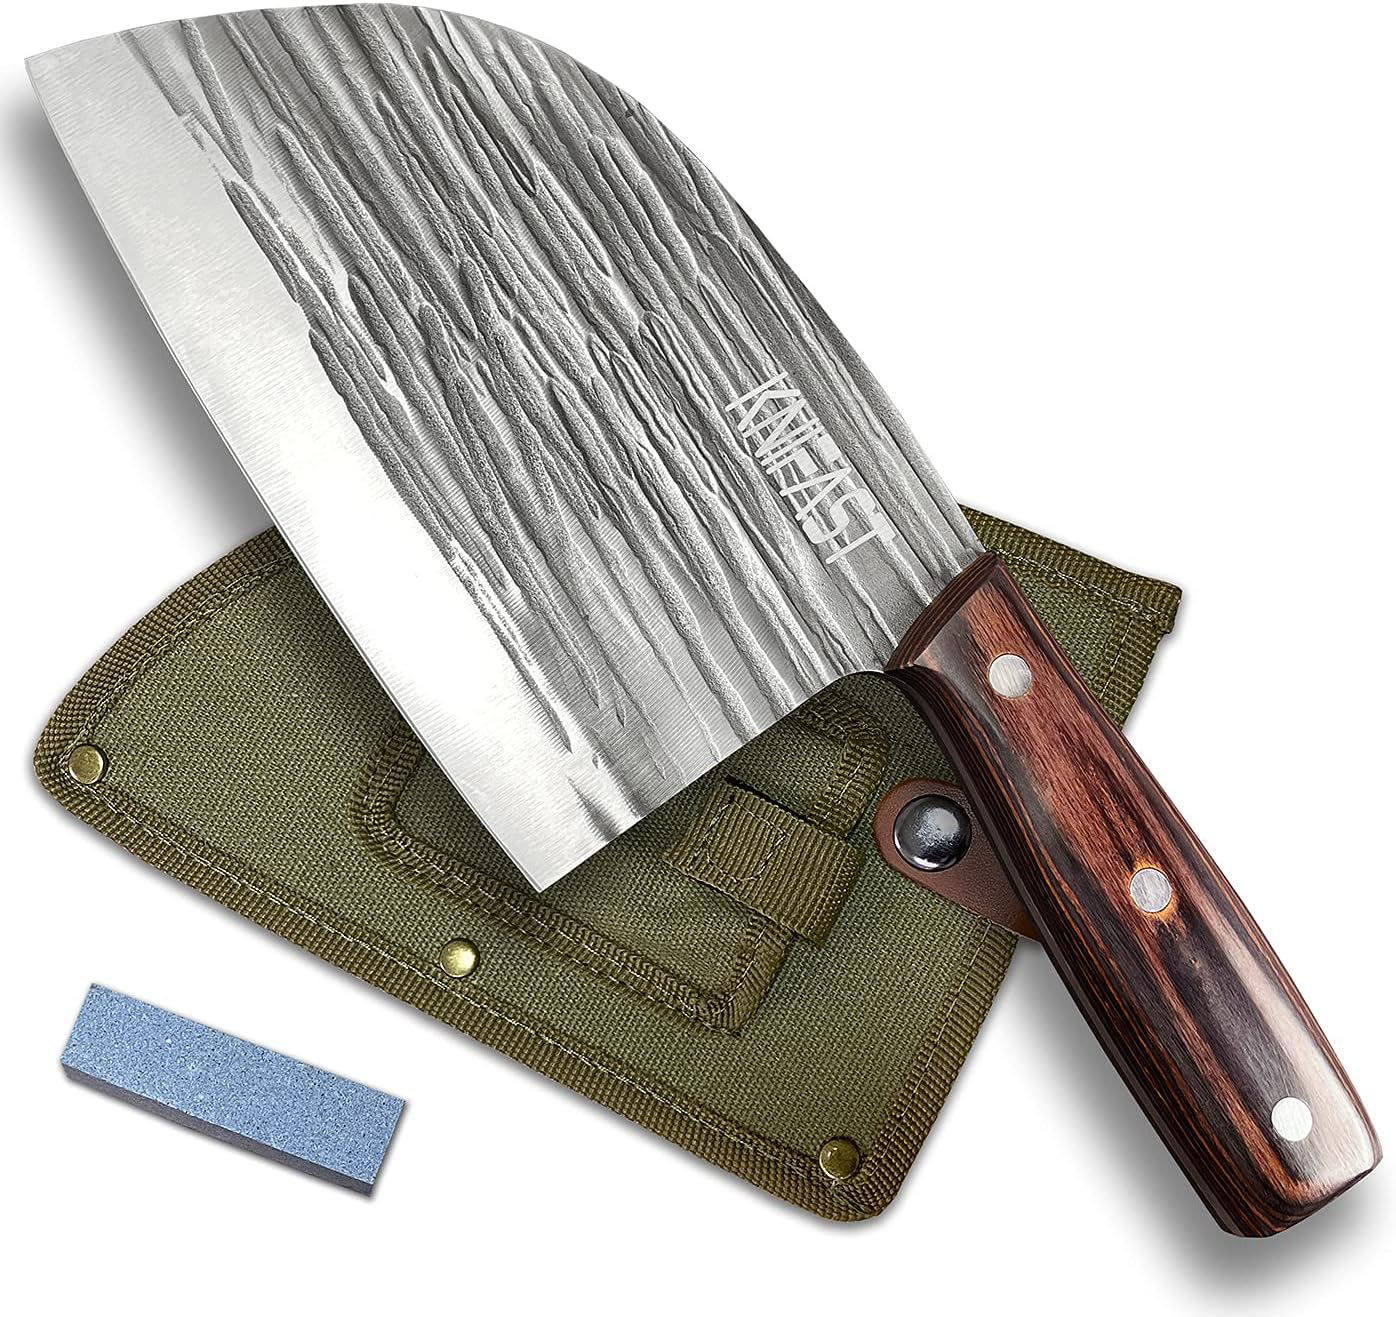 KD Serbian Handmade Forged Cleaver Kitchen Knife Chef Butcher Slicing Knife With Knife Stone Grinder